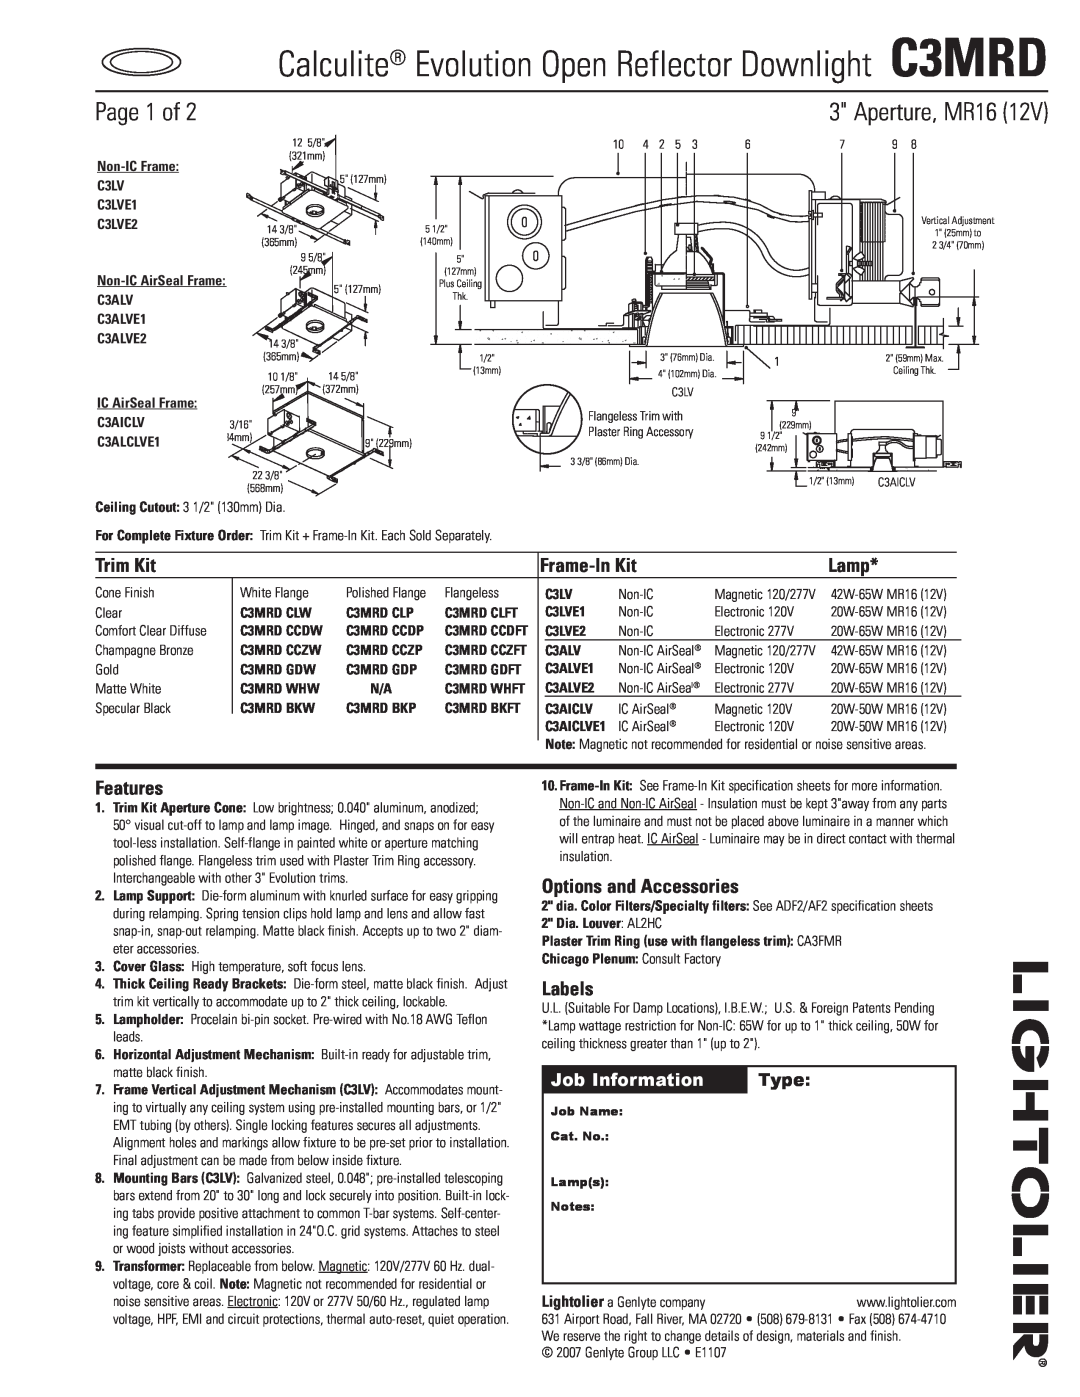 Lightolier specifications Calculite Evolution Open Reflector Downlight C3MRD, Page, Aperture, MR16, Job Information 